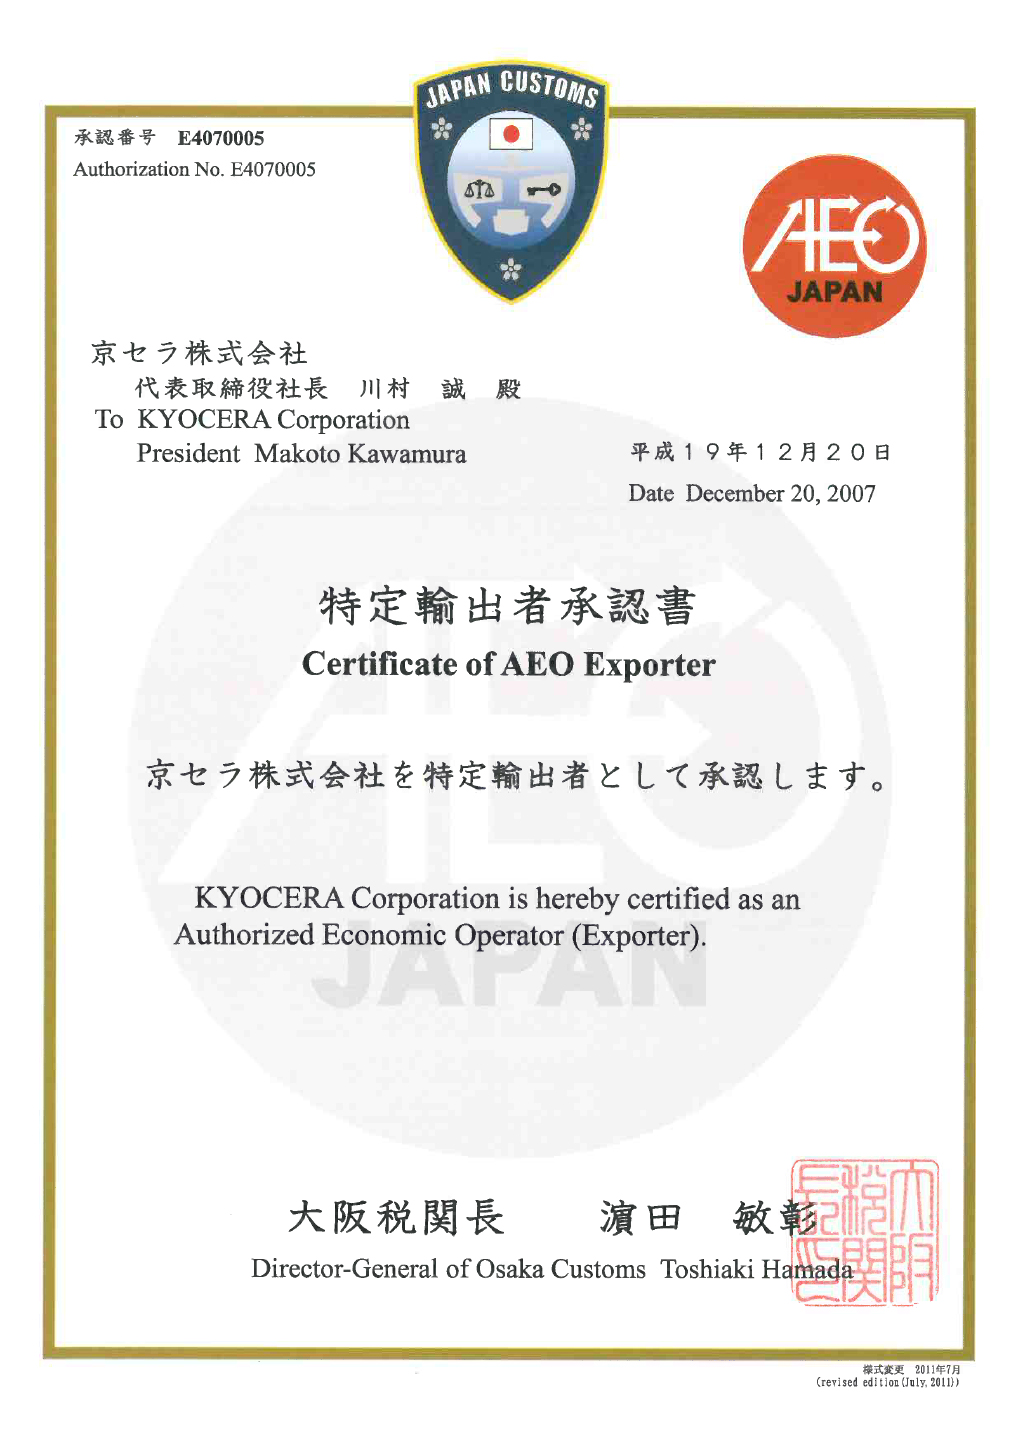 Photo: Authorized exporter certificate